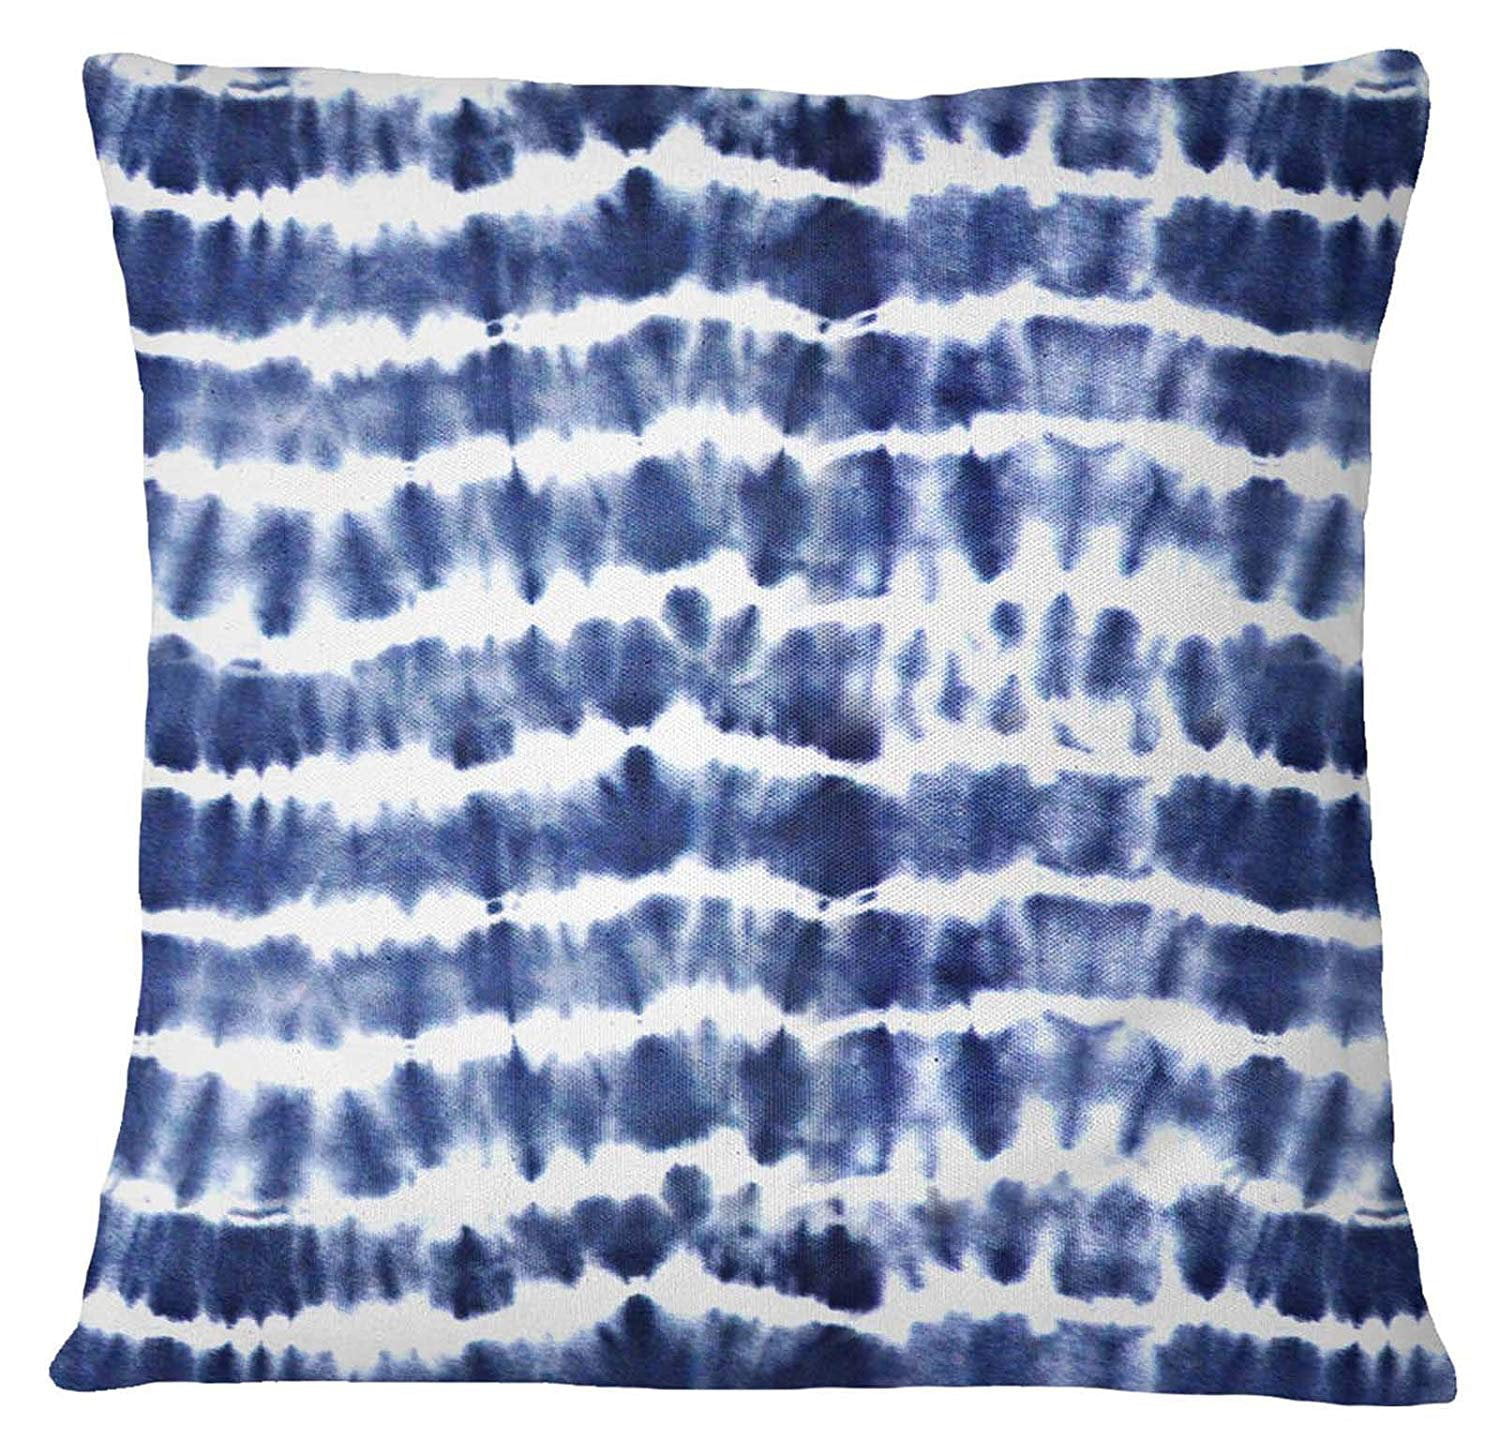 S4Sassy Blue Shibori Cushion Cover Square Pillow Case Sofa Cushion Cover Decor 